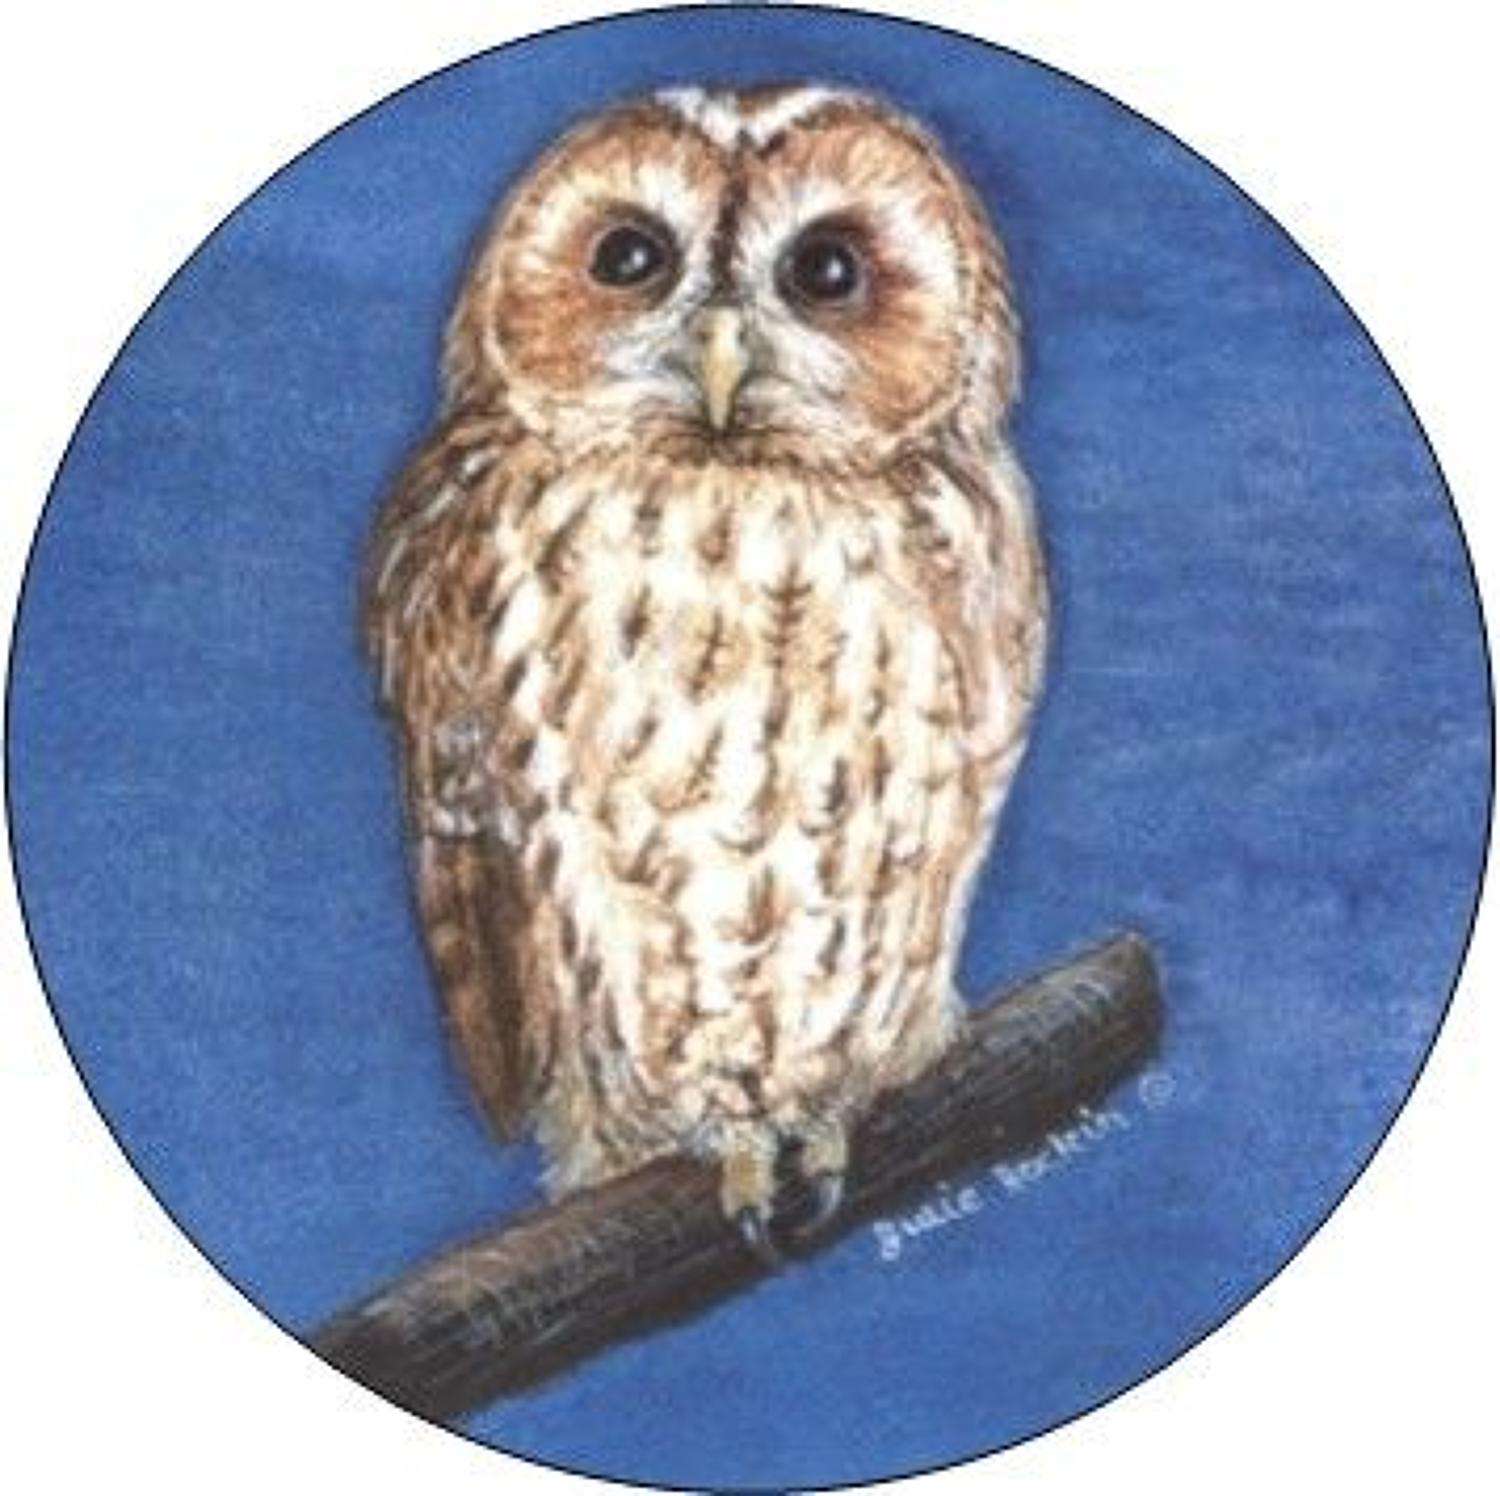 Compact Pocket Mirror - Tawny Owl